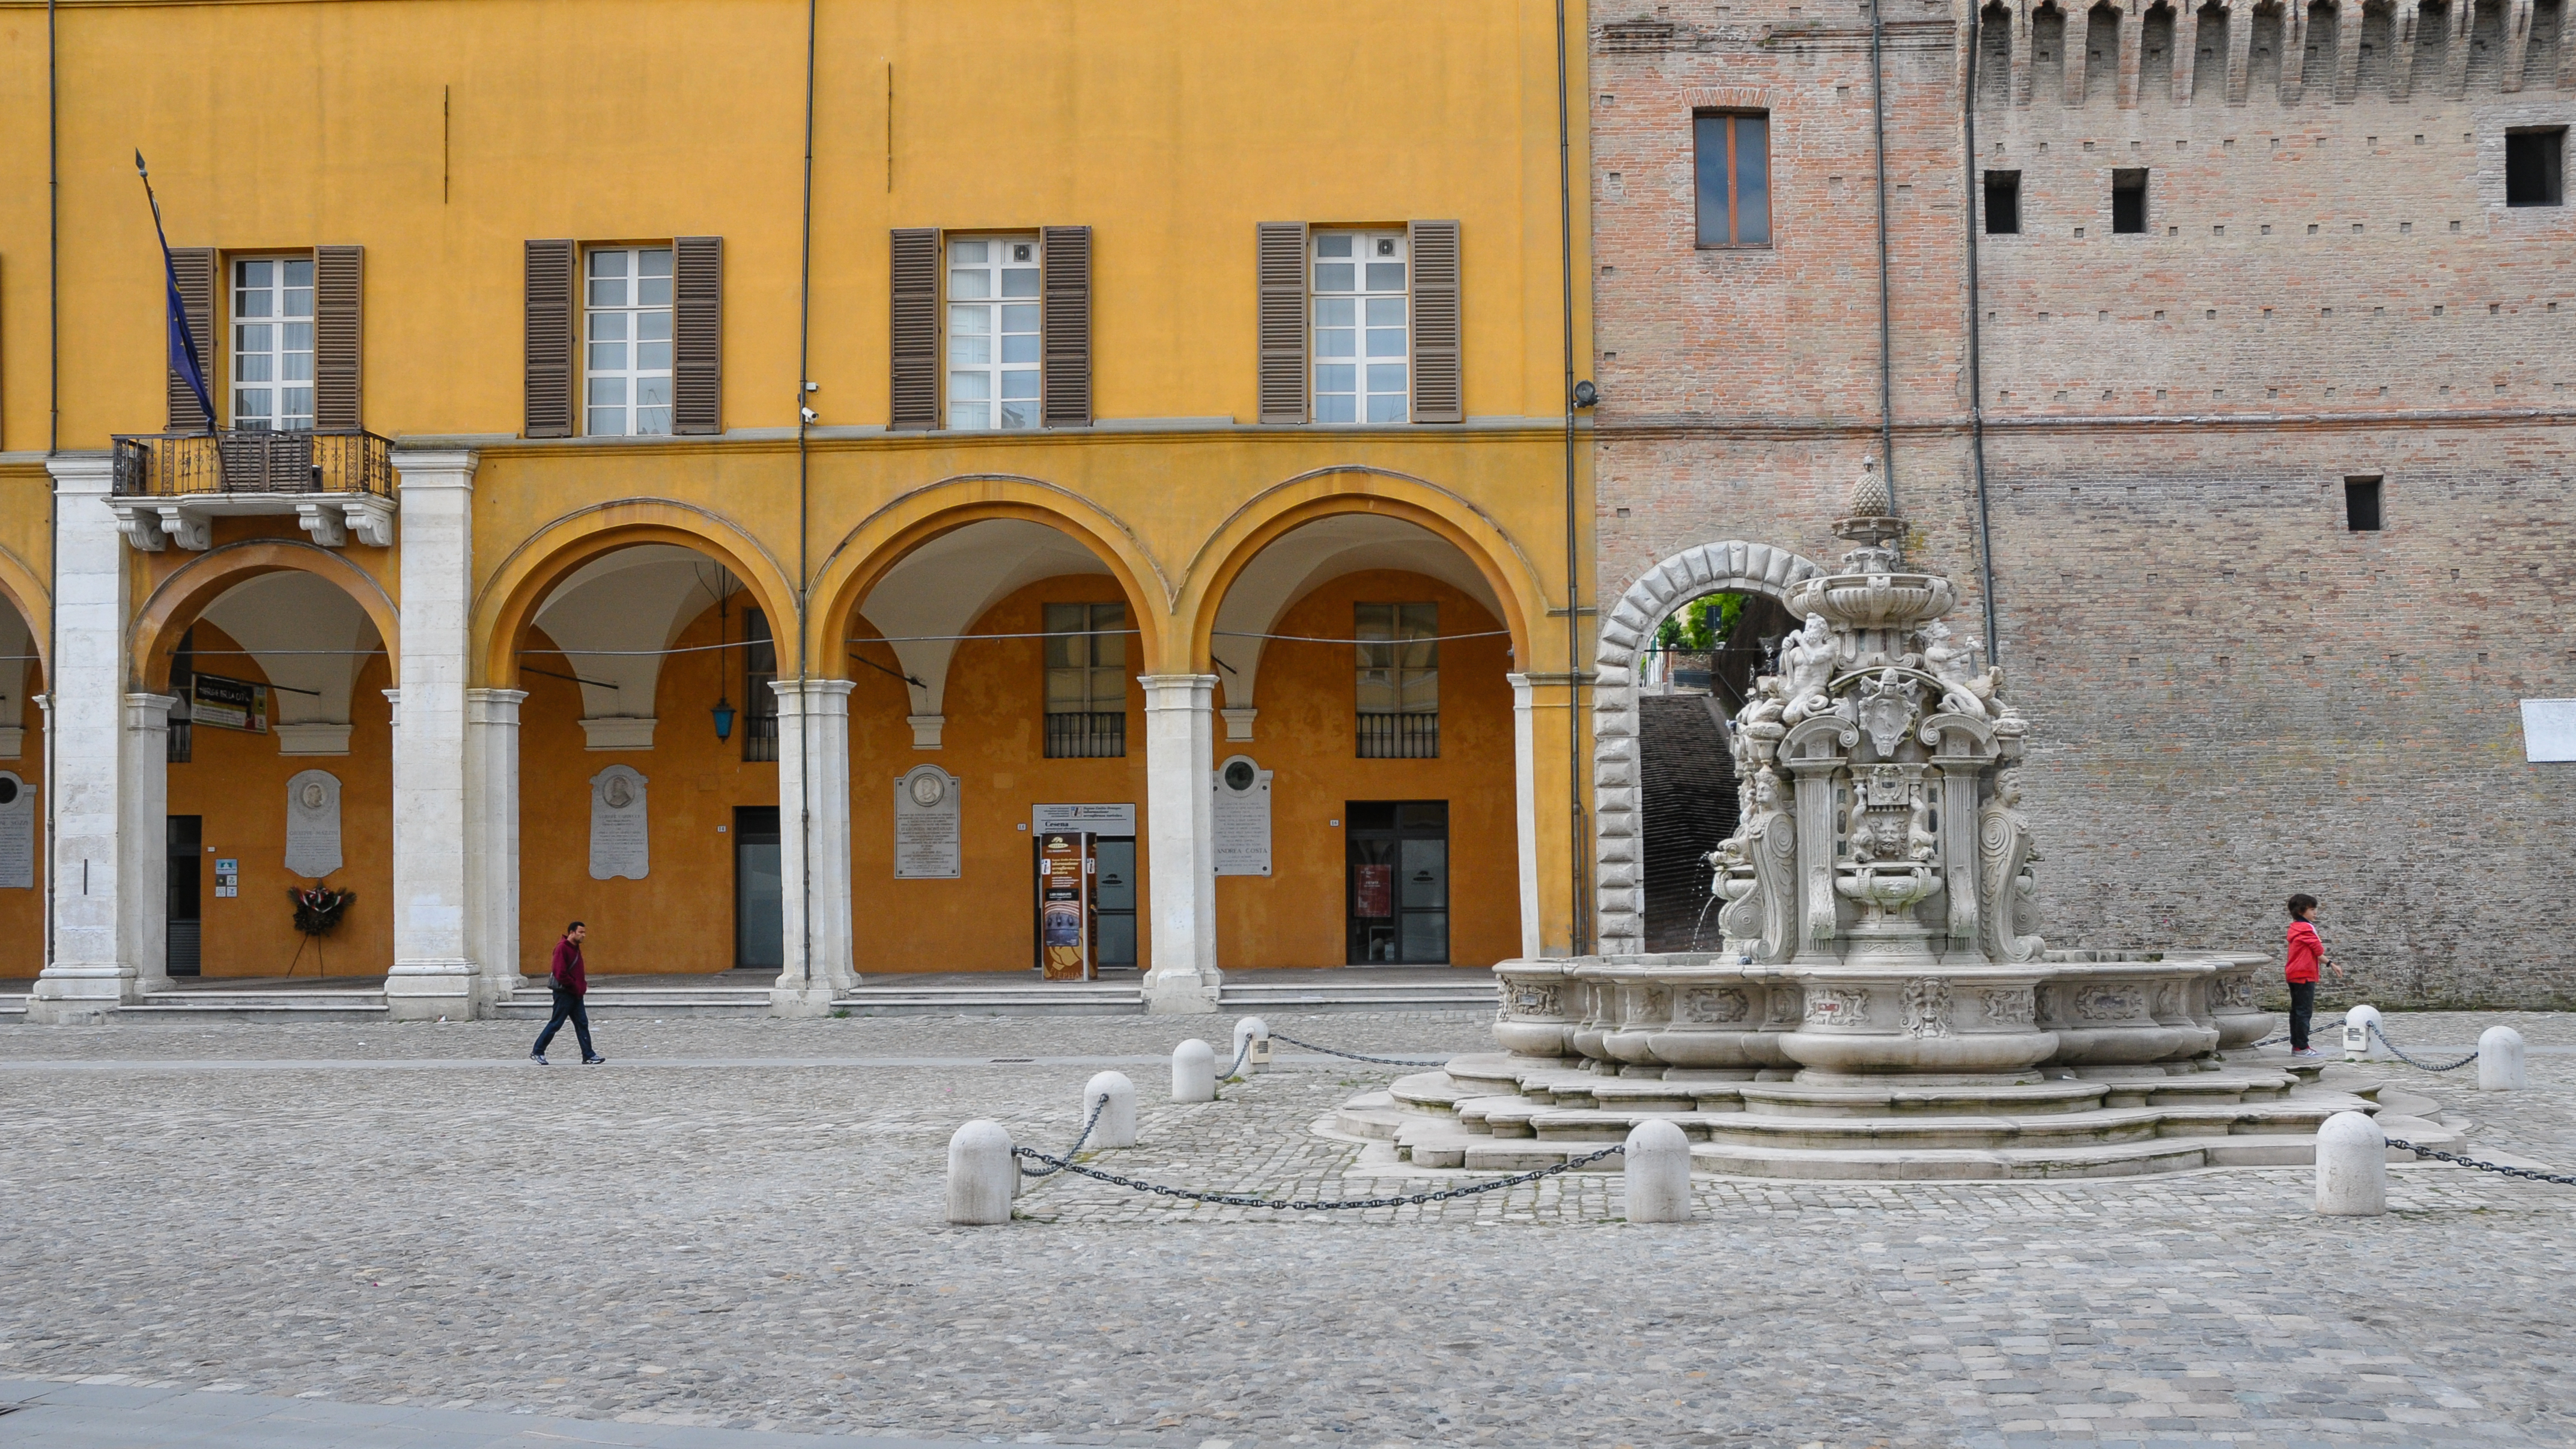 foto: https://upload.wikimedia.org/wikipedia/commons/8/8d/Cesena_Piazza_del_Popolo-4_Fontana_Masini.jpg